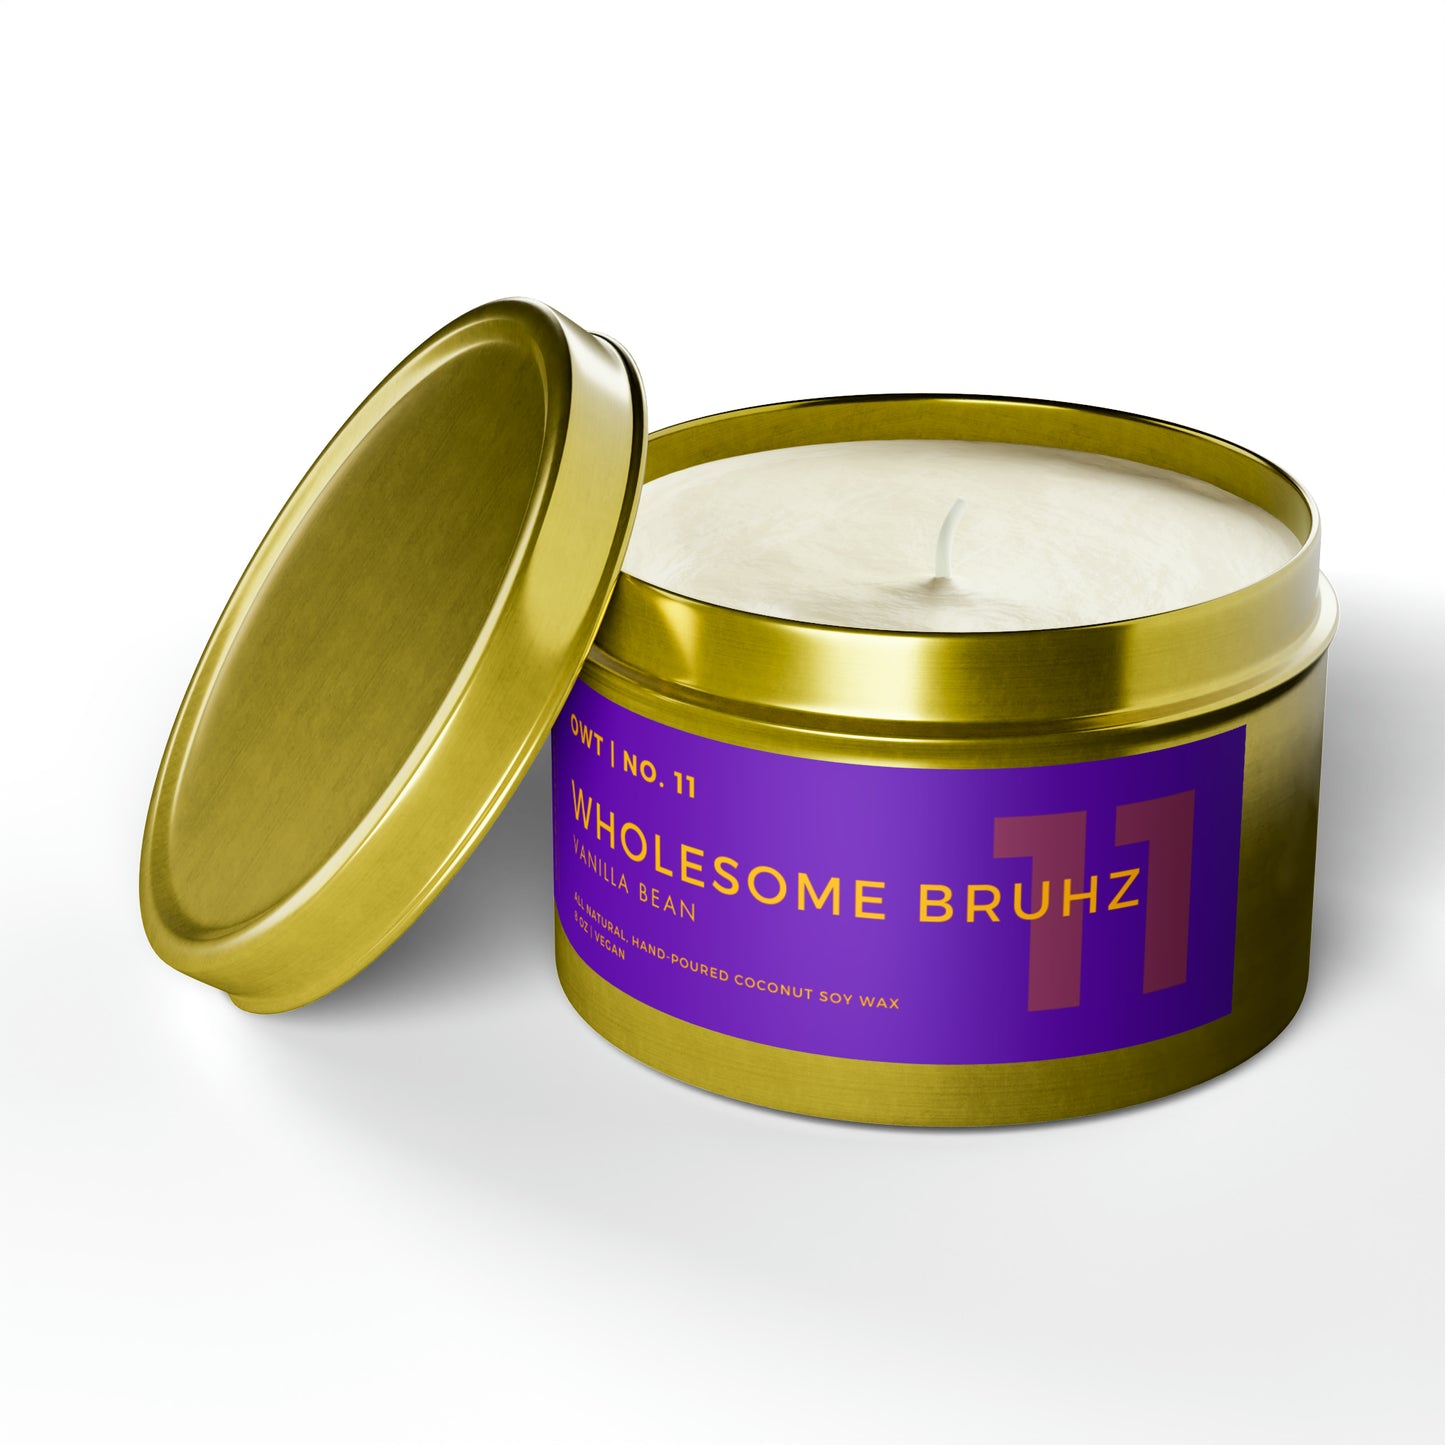 Owt No. 11 Wholesome Bruhz Candle | Vanilla Bean